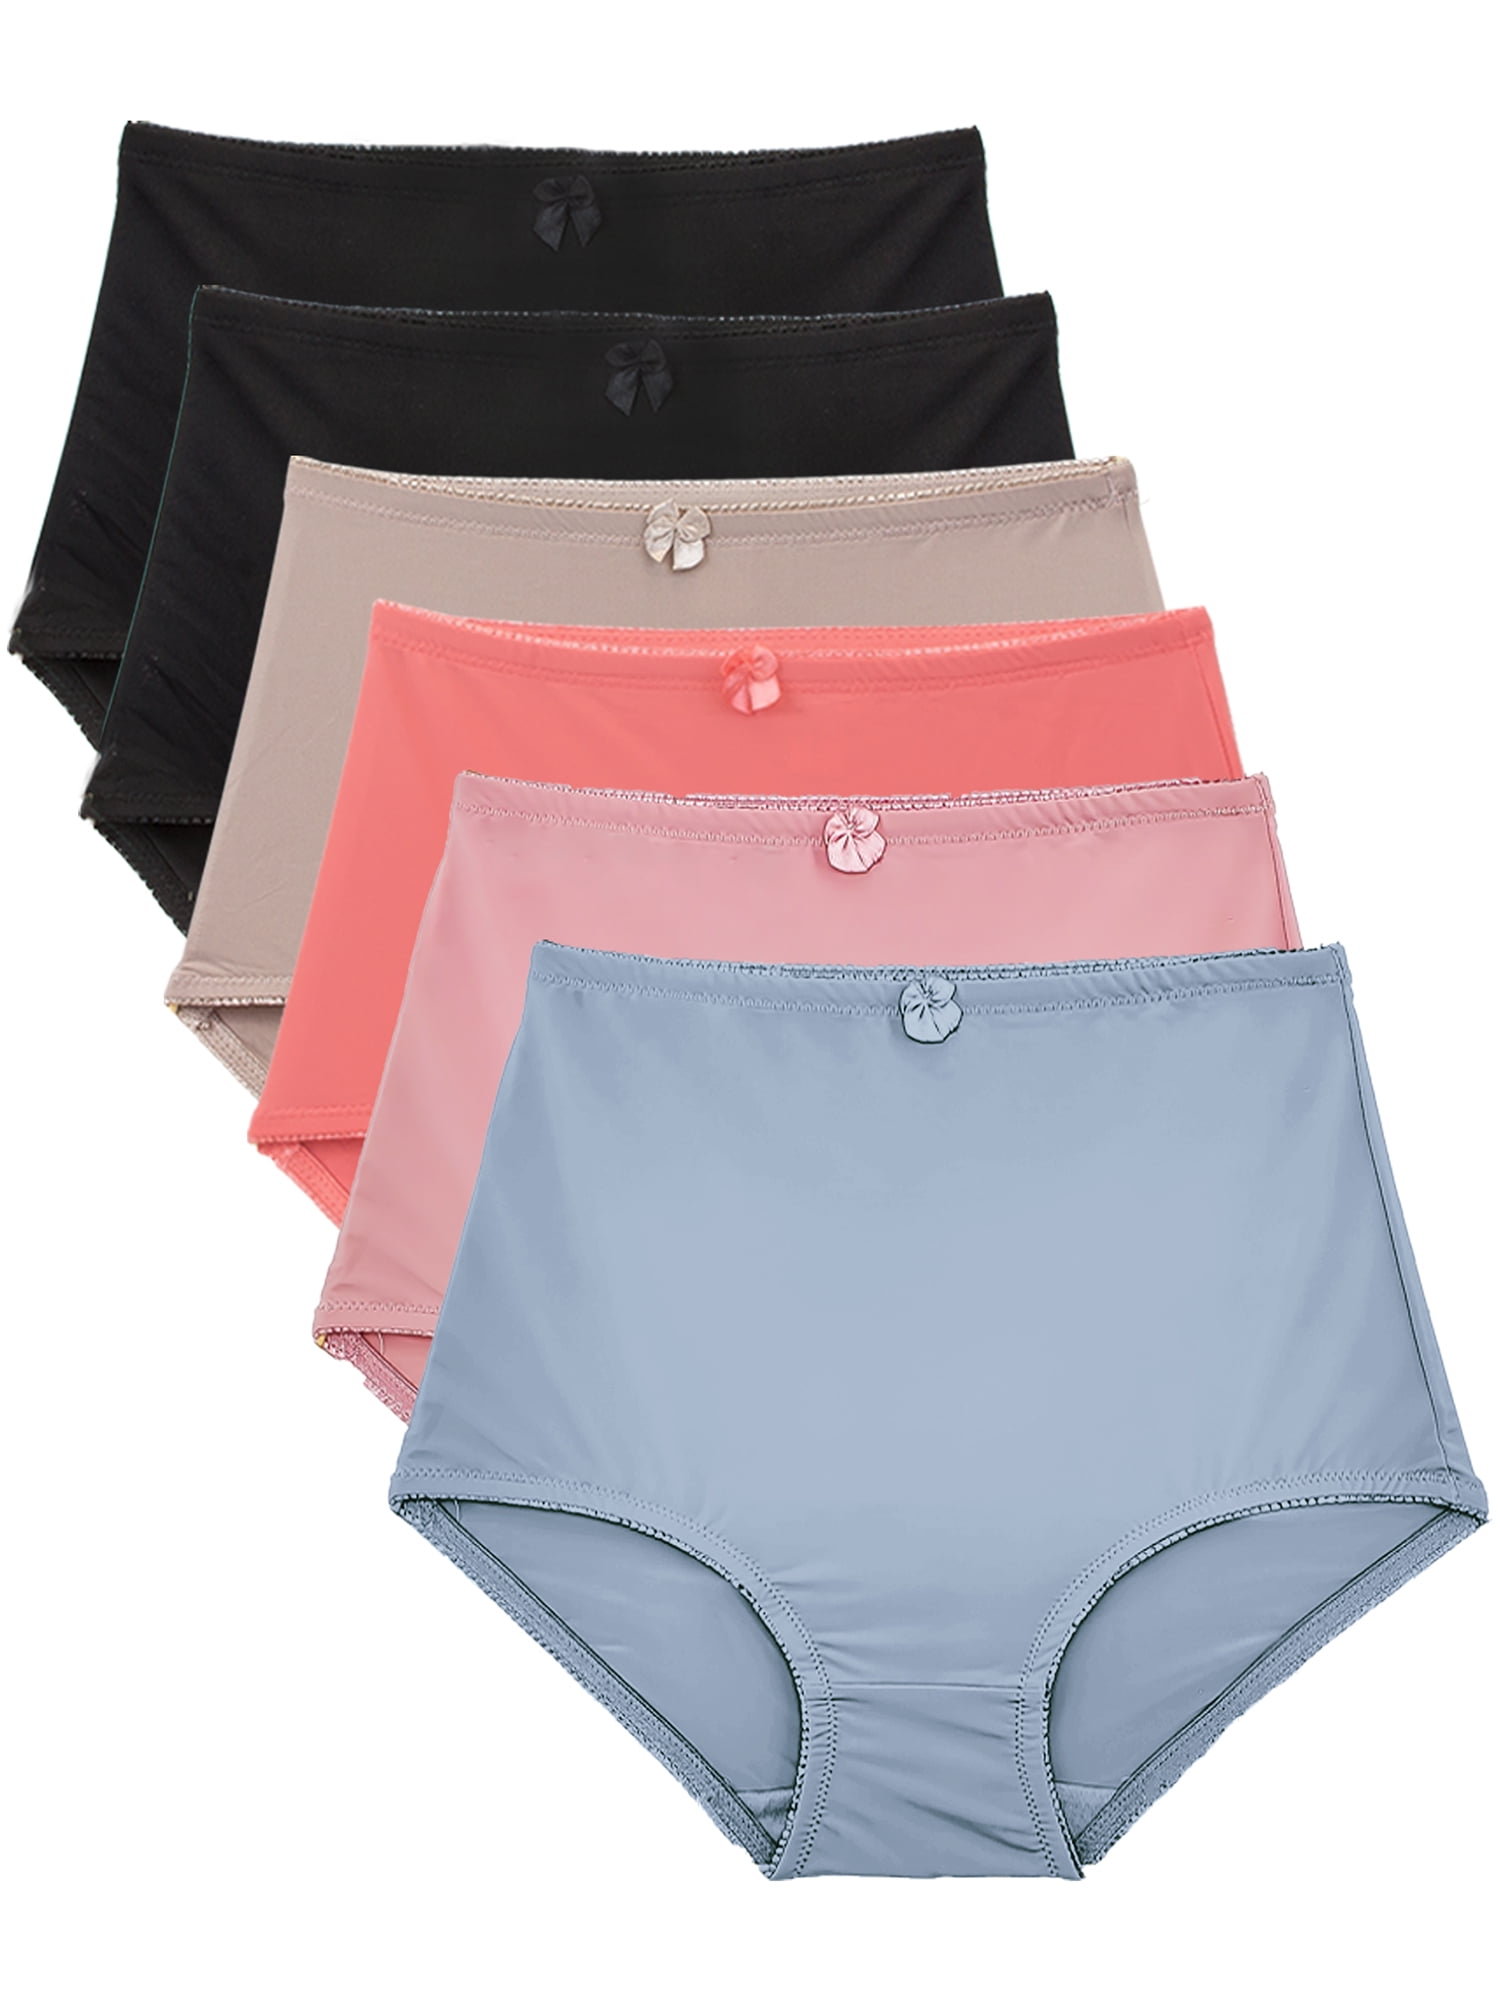 B2BODY Women's Panties Comfortable High-Waist Tummy Control Briefs  Multi-Pack 